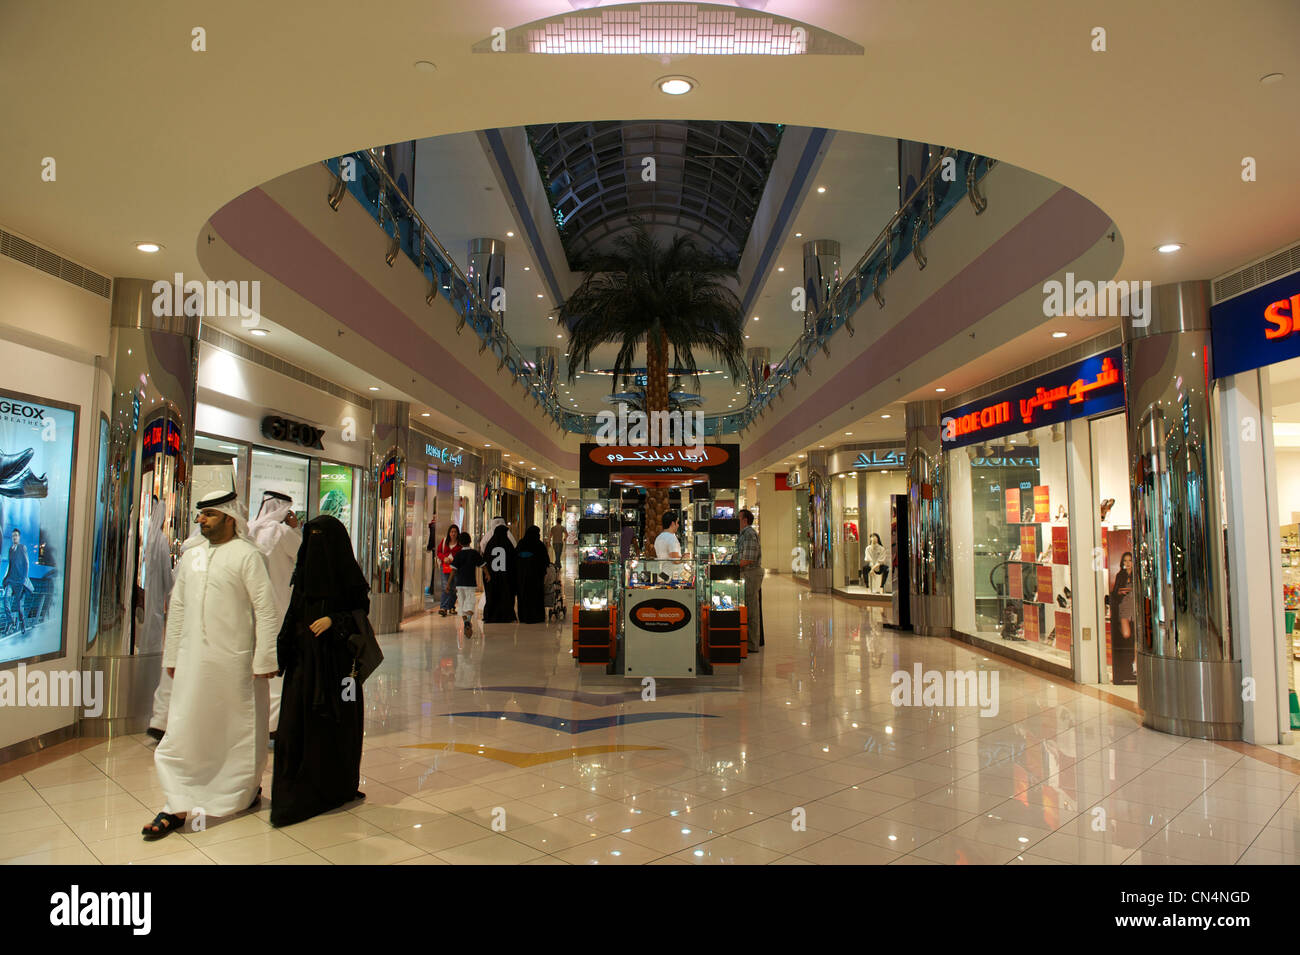 Abu dhabi mall hi-res stock photography and images - Alamy